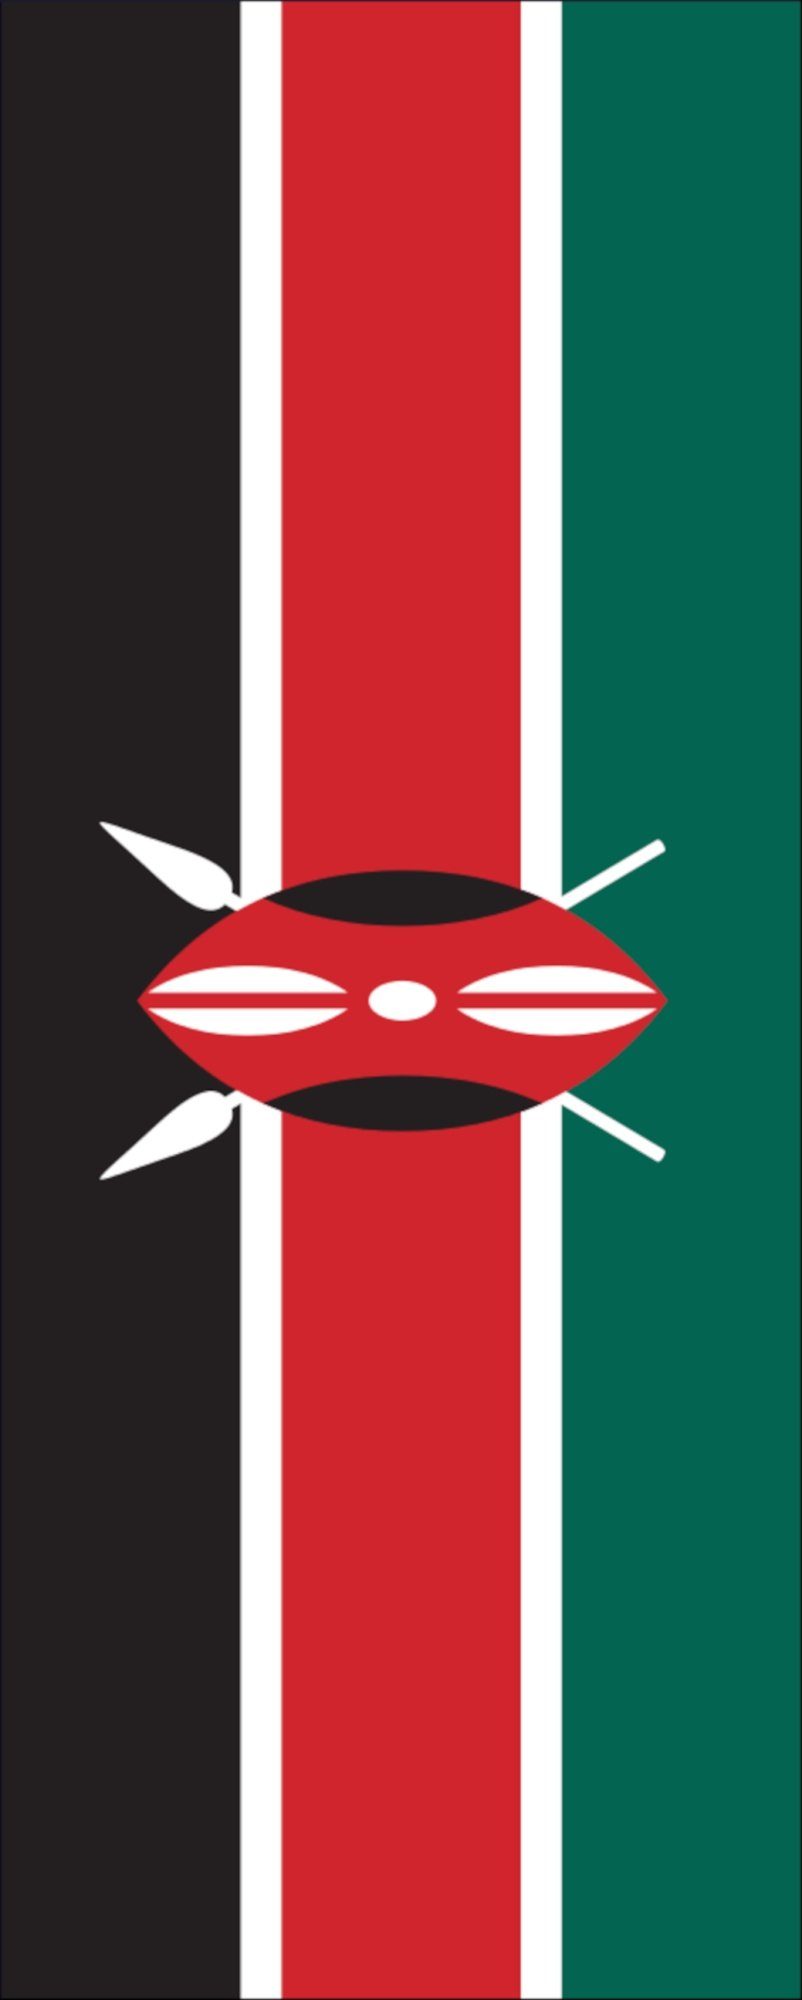 110 Flagge g/m² flaggenmeer Flagge Kenia Hochformat